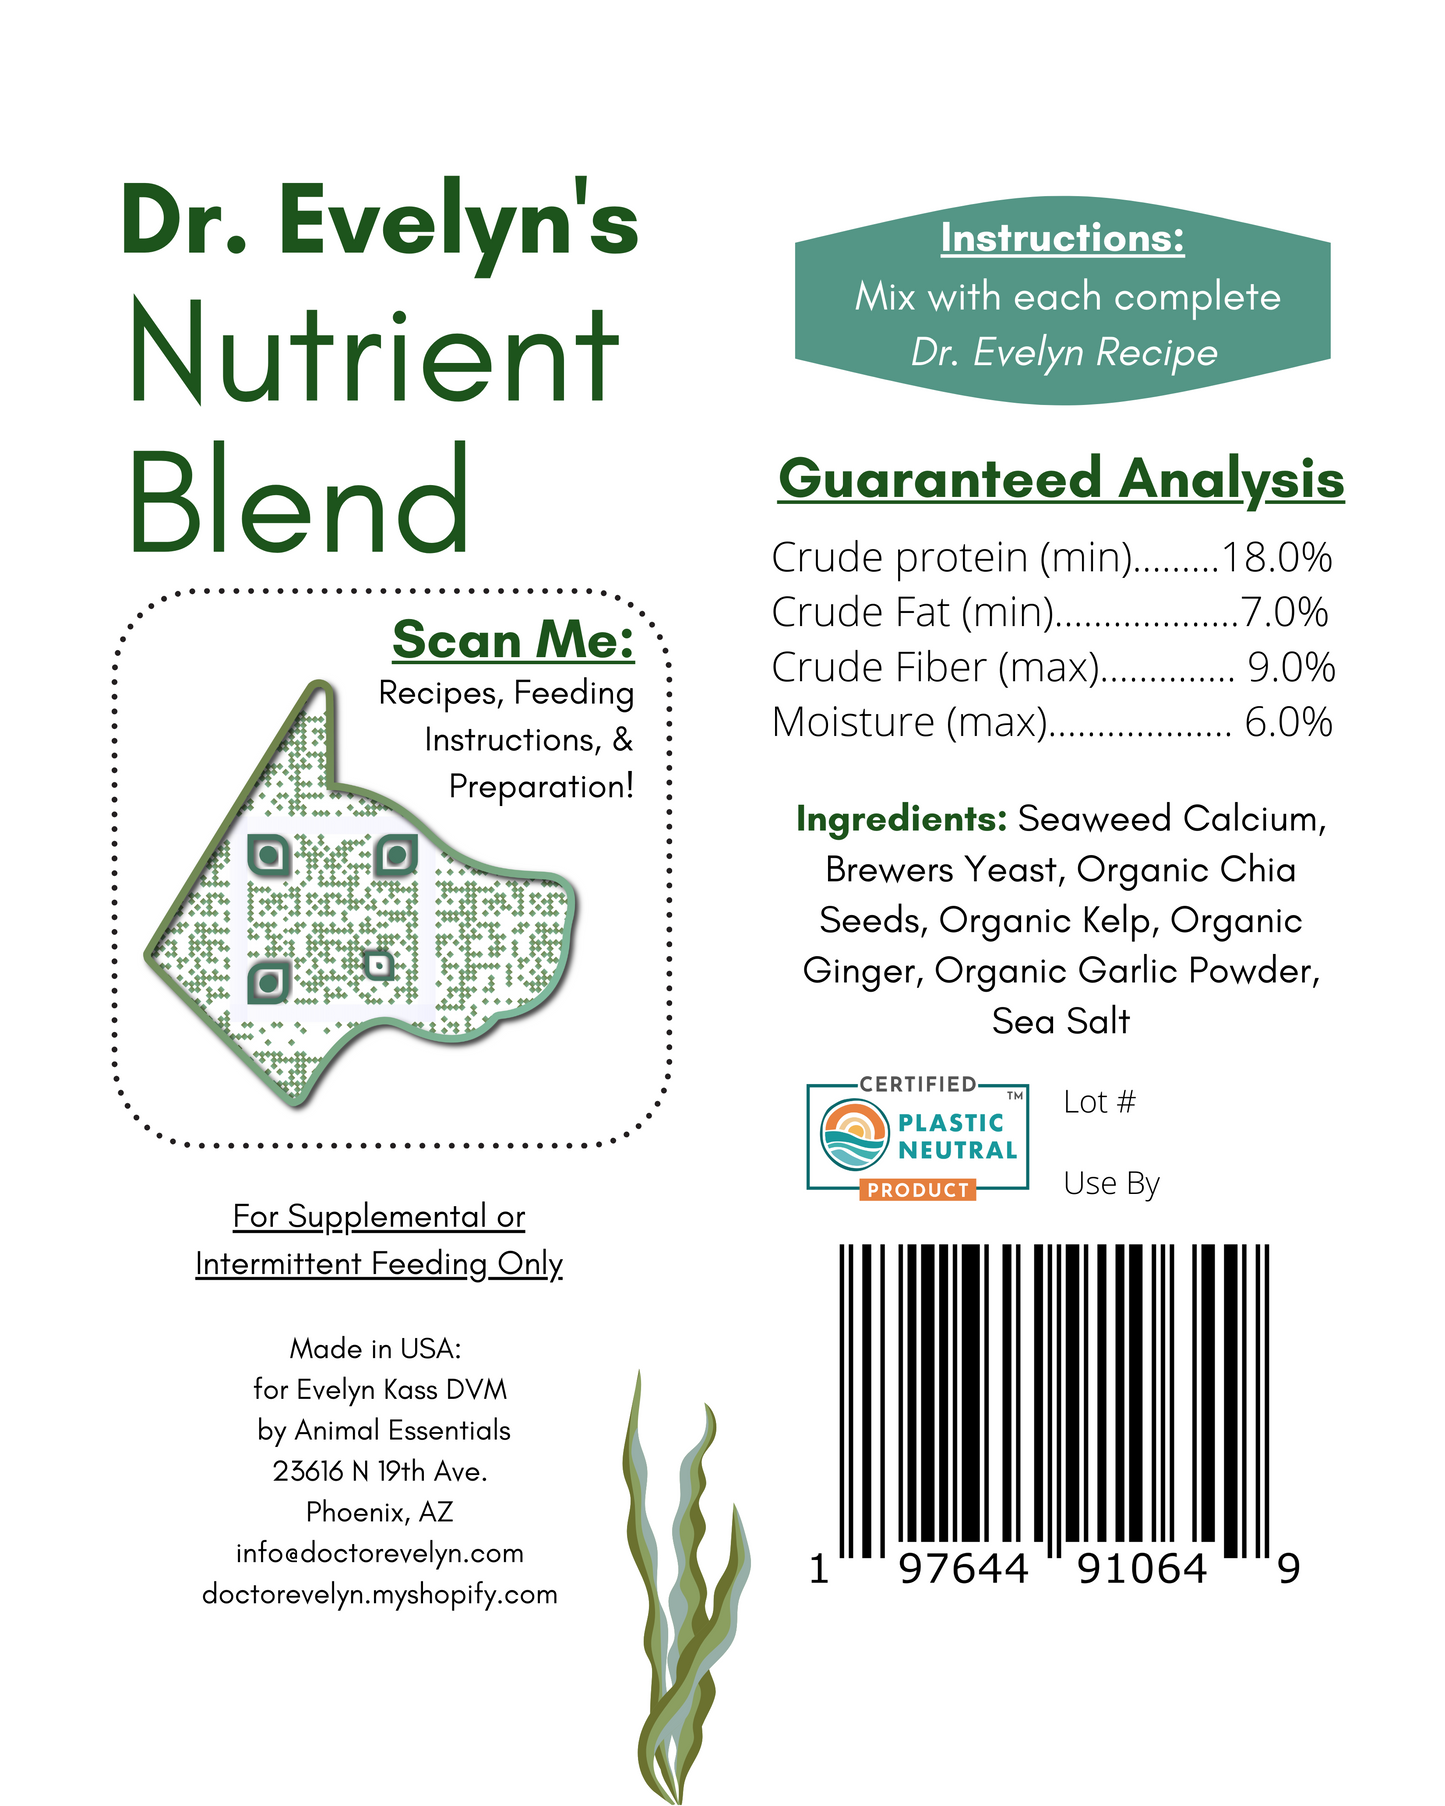 Dr. Evelyn's Nutrient Blend